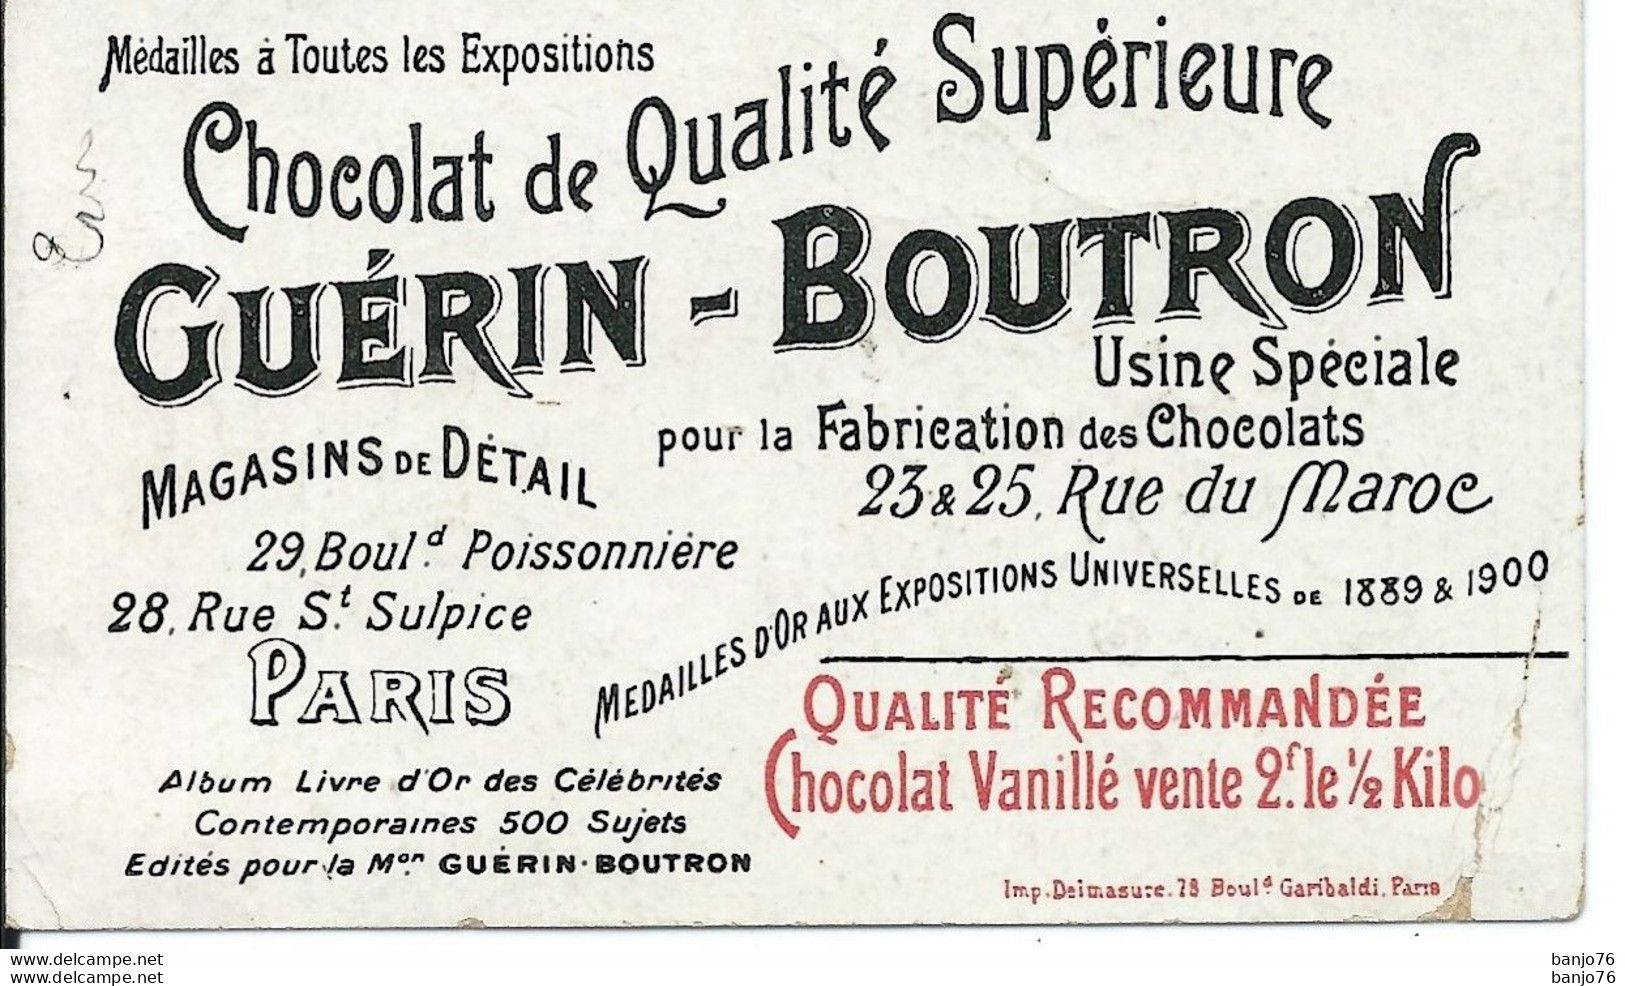 Chromo - Chocolat Guérin Boutron - N° 330 - Princesse Geneviève Adolphe De Suède - Guérin-Boutron